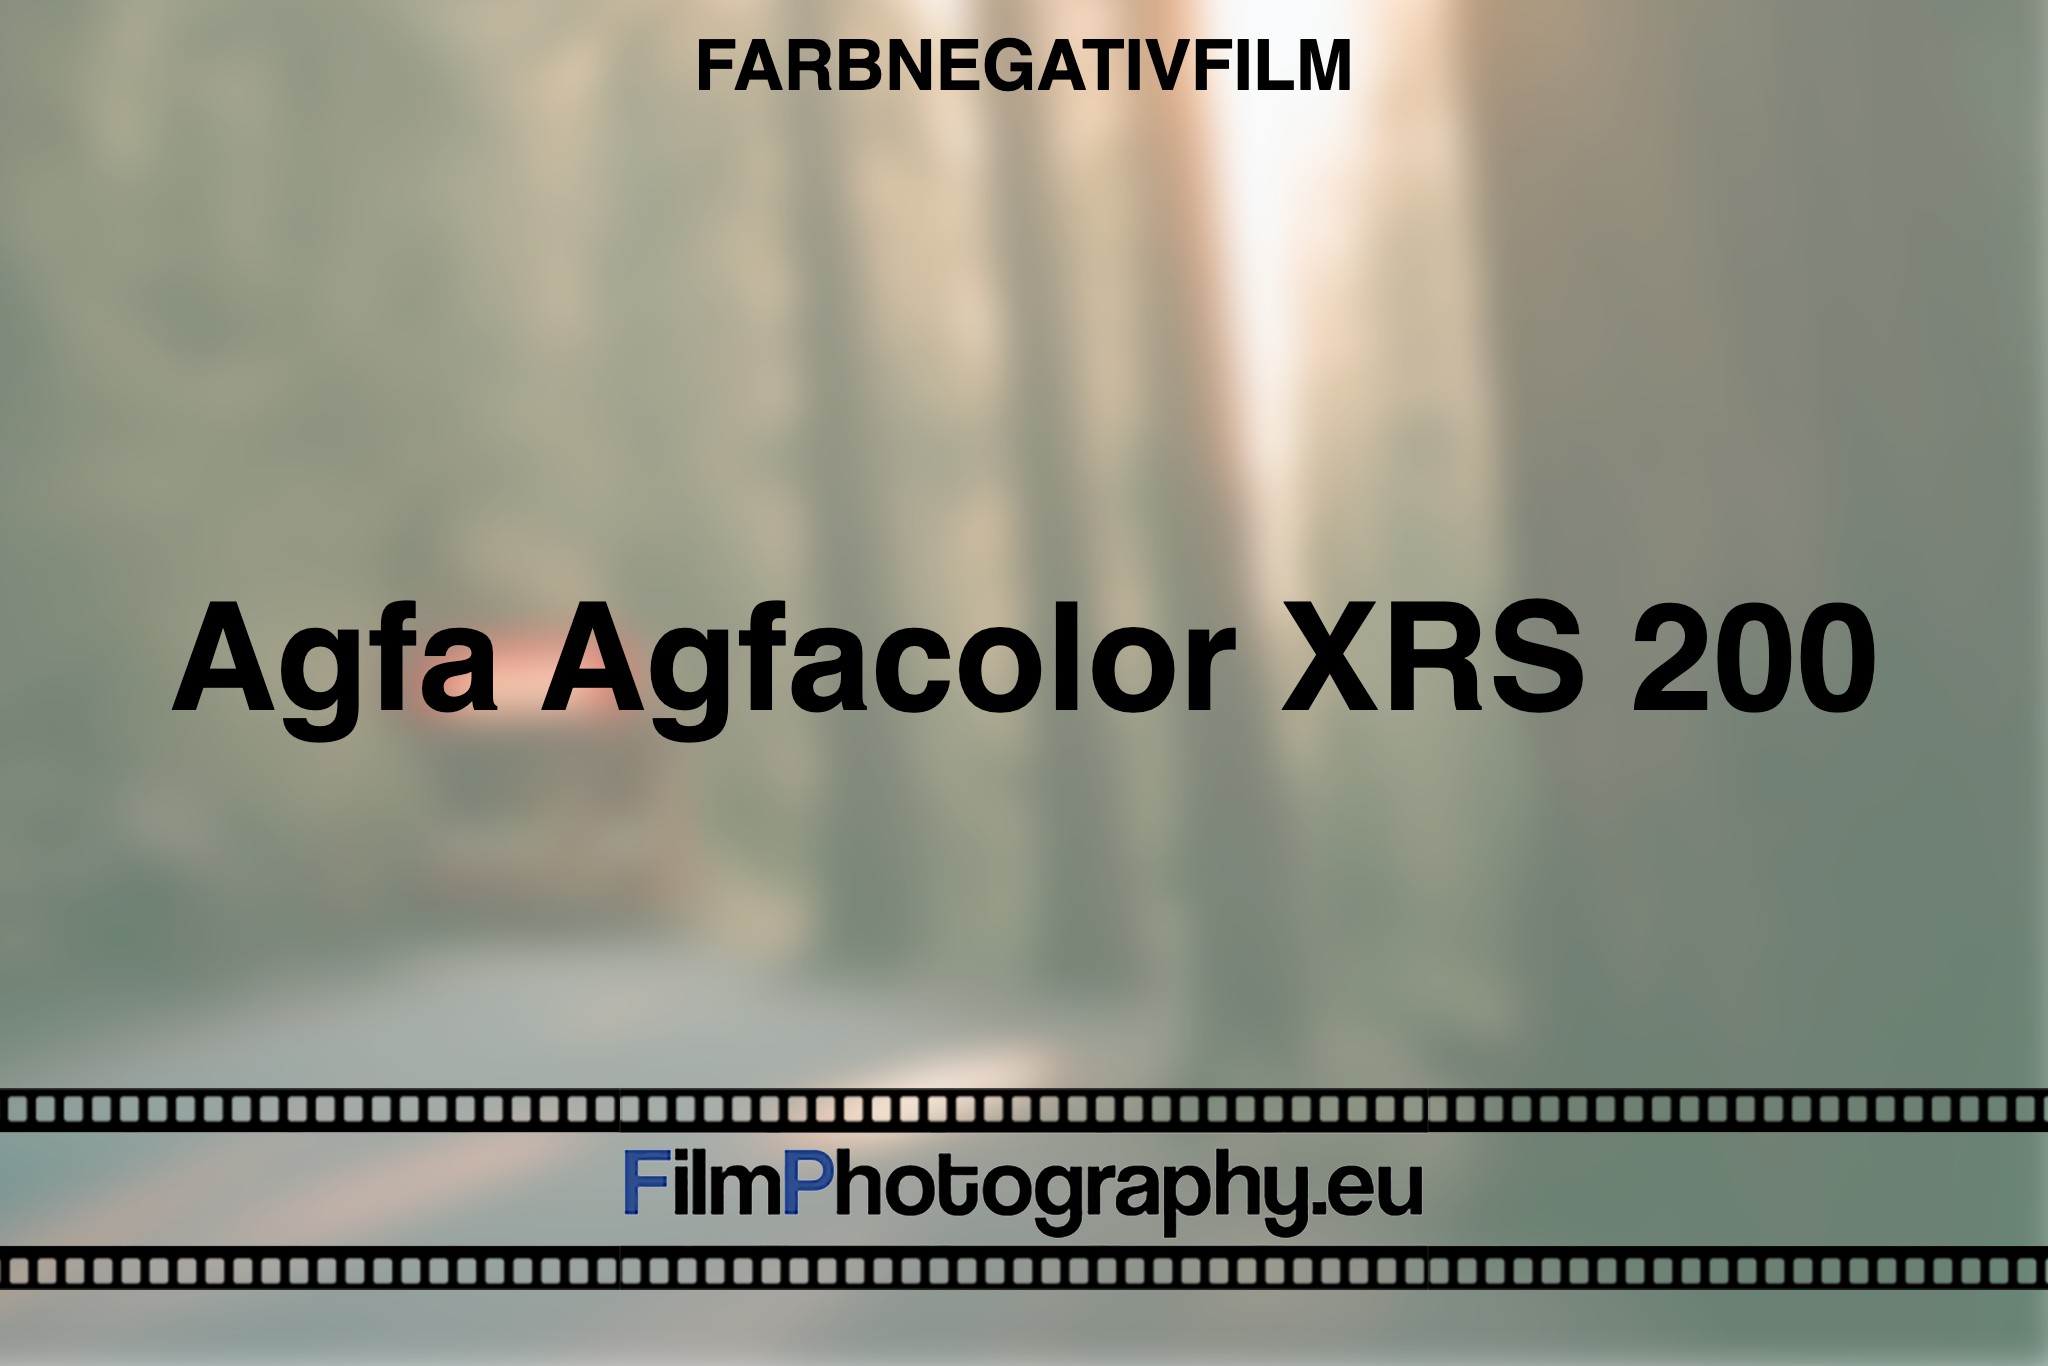 agfa-agfacolor-xrs-200-farbnegativfilm-bnv